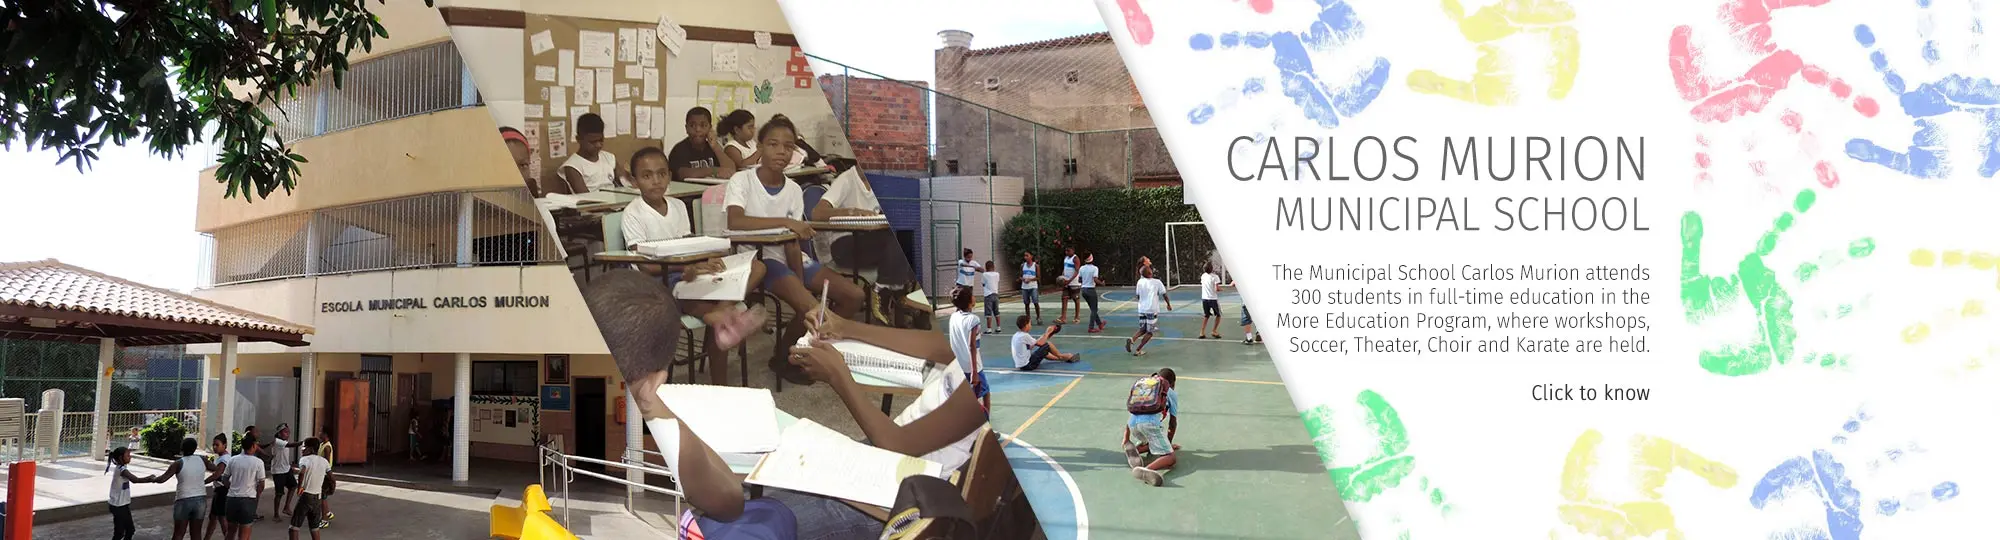 Carlos Murion Municipal School | EN